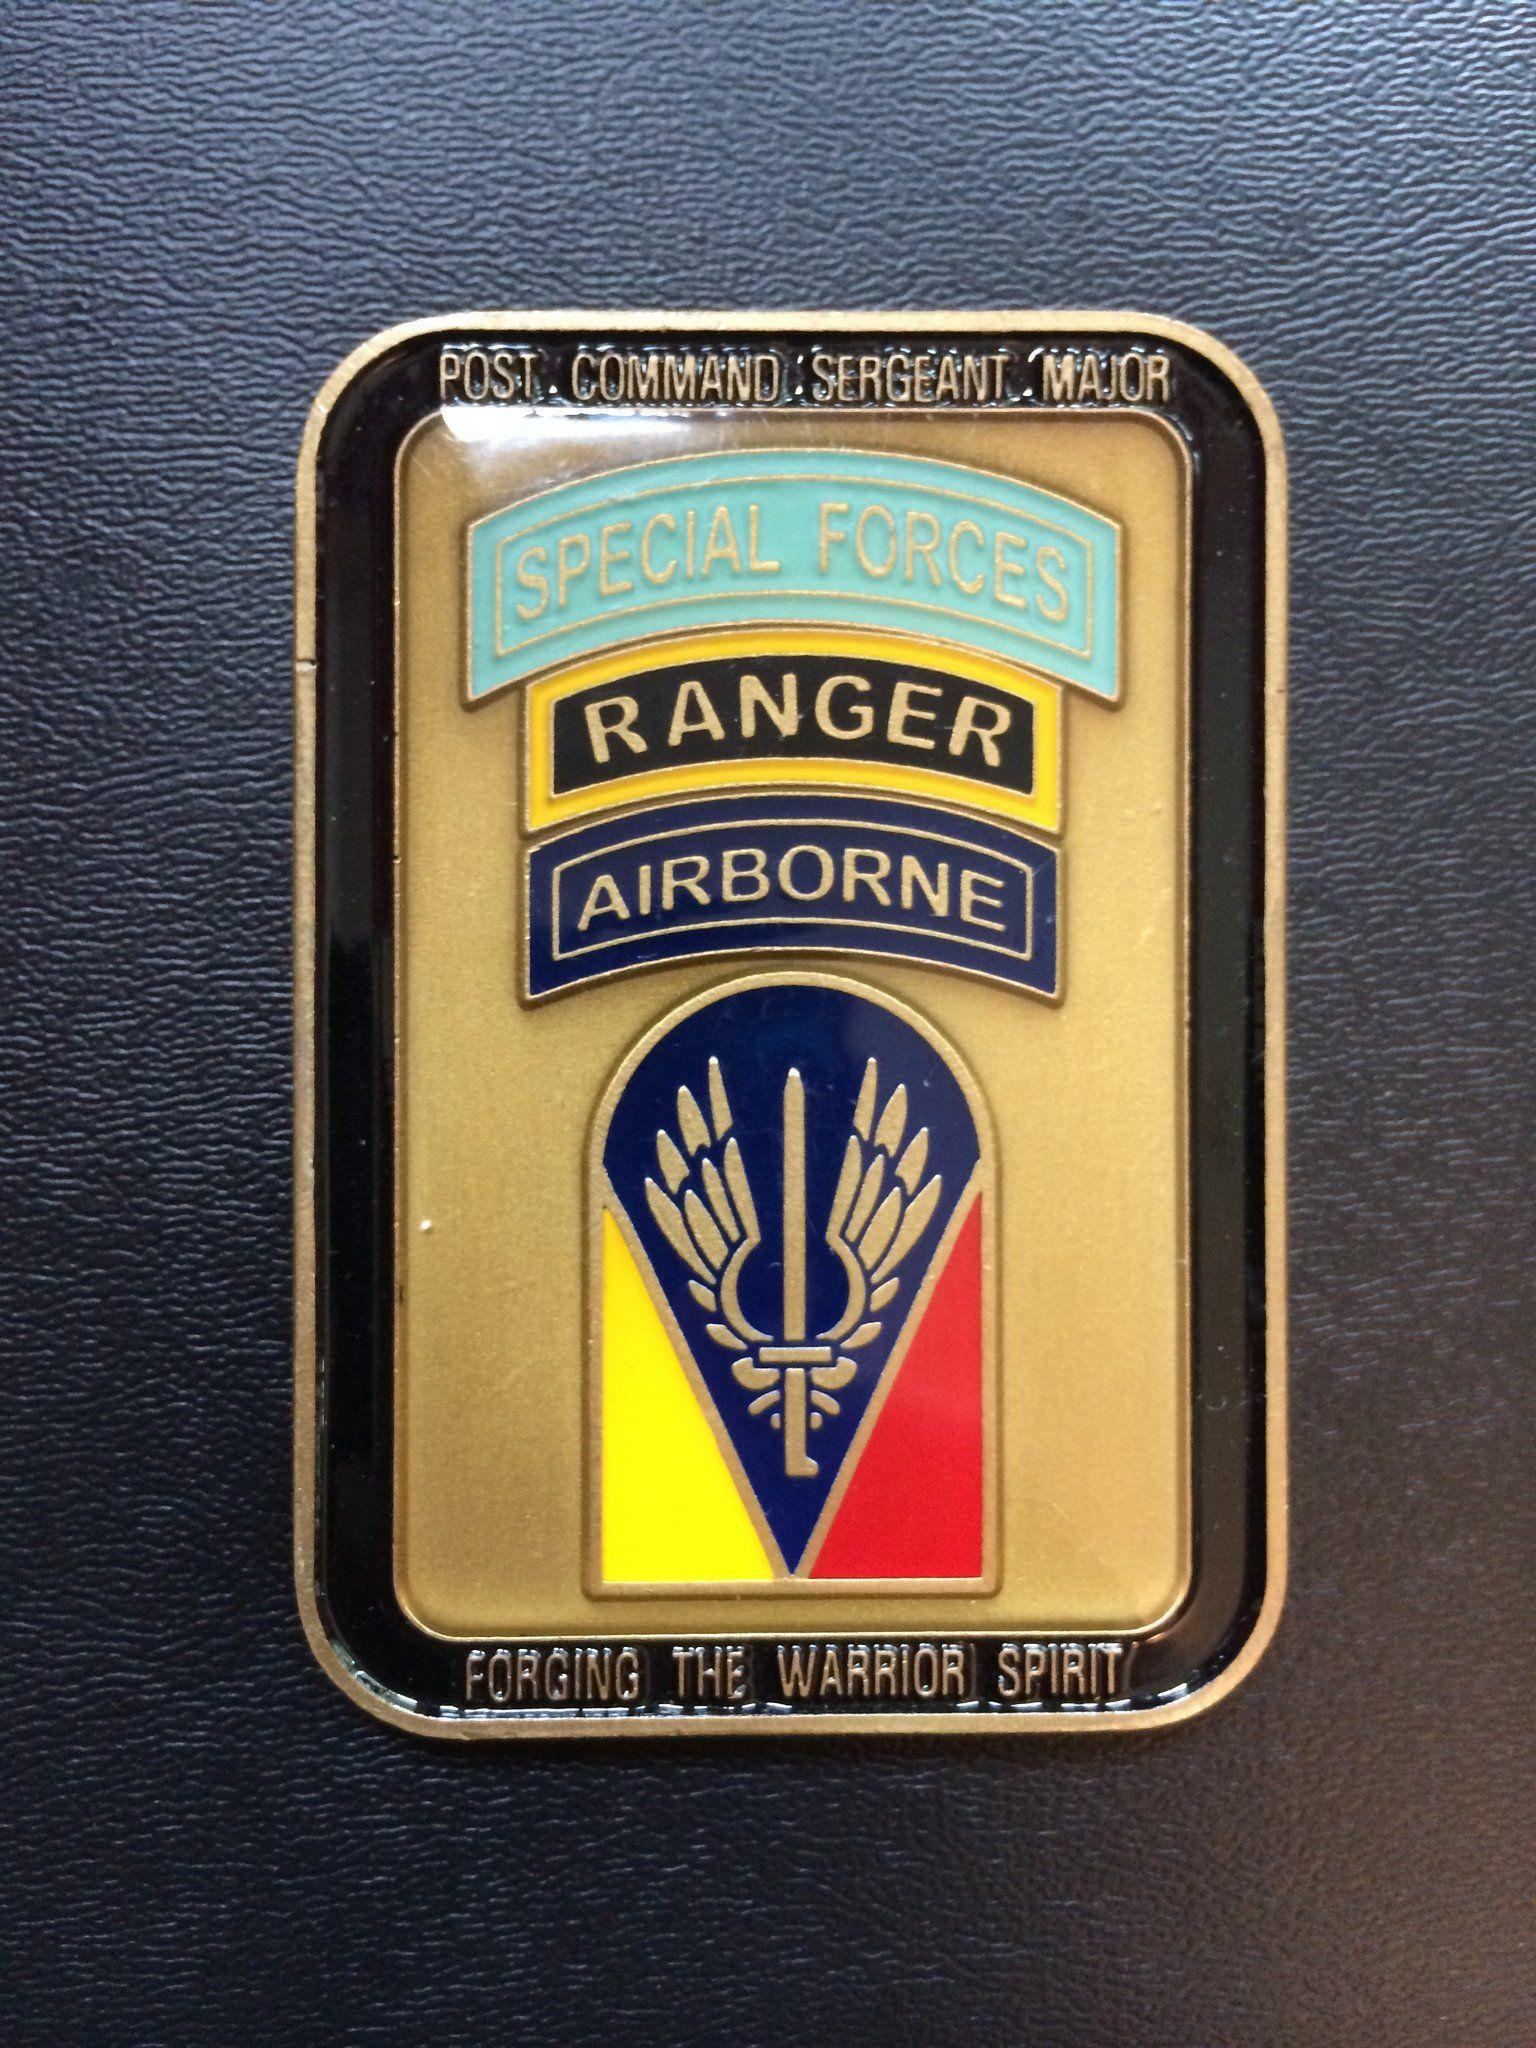 JRTC Logo - JRTC and Fort Polk Command Sergeant Major (CSM)